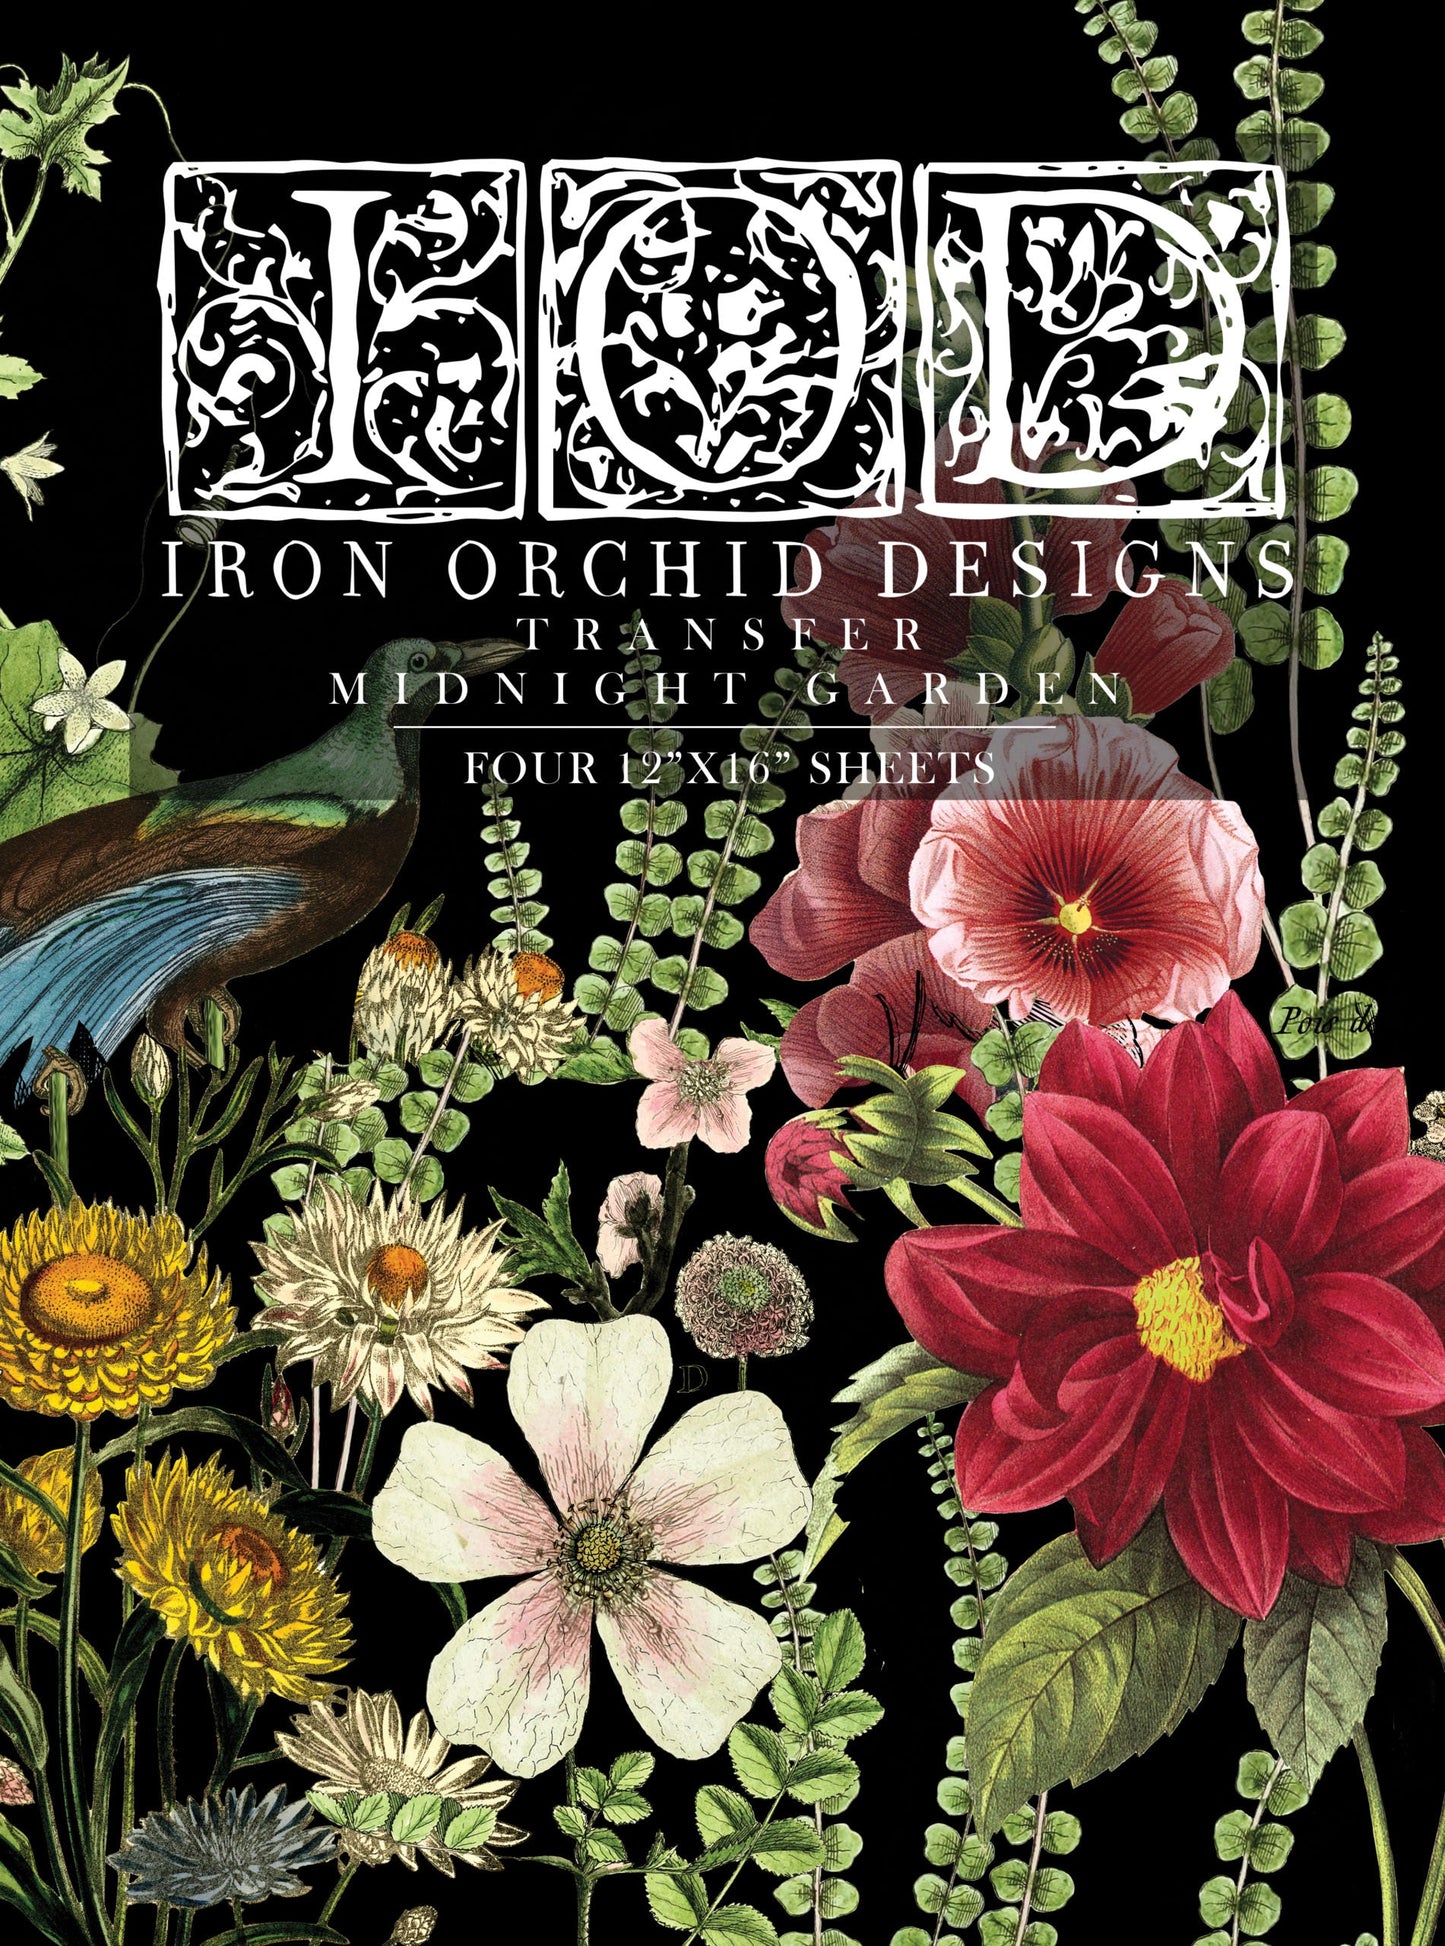 Midnight Garden Transfer by Iron Orchid Designs